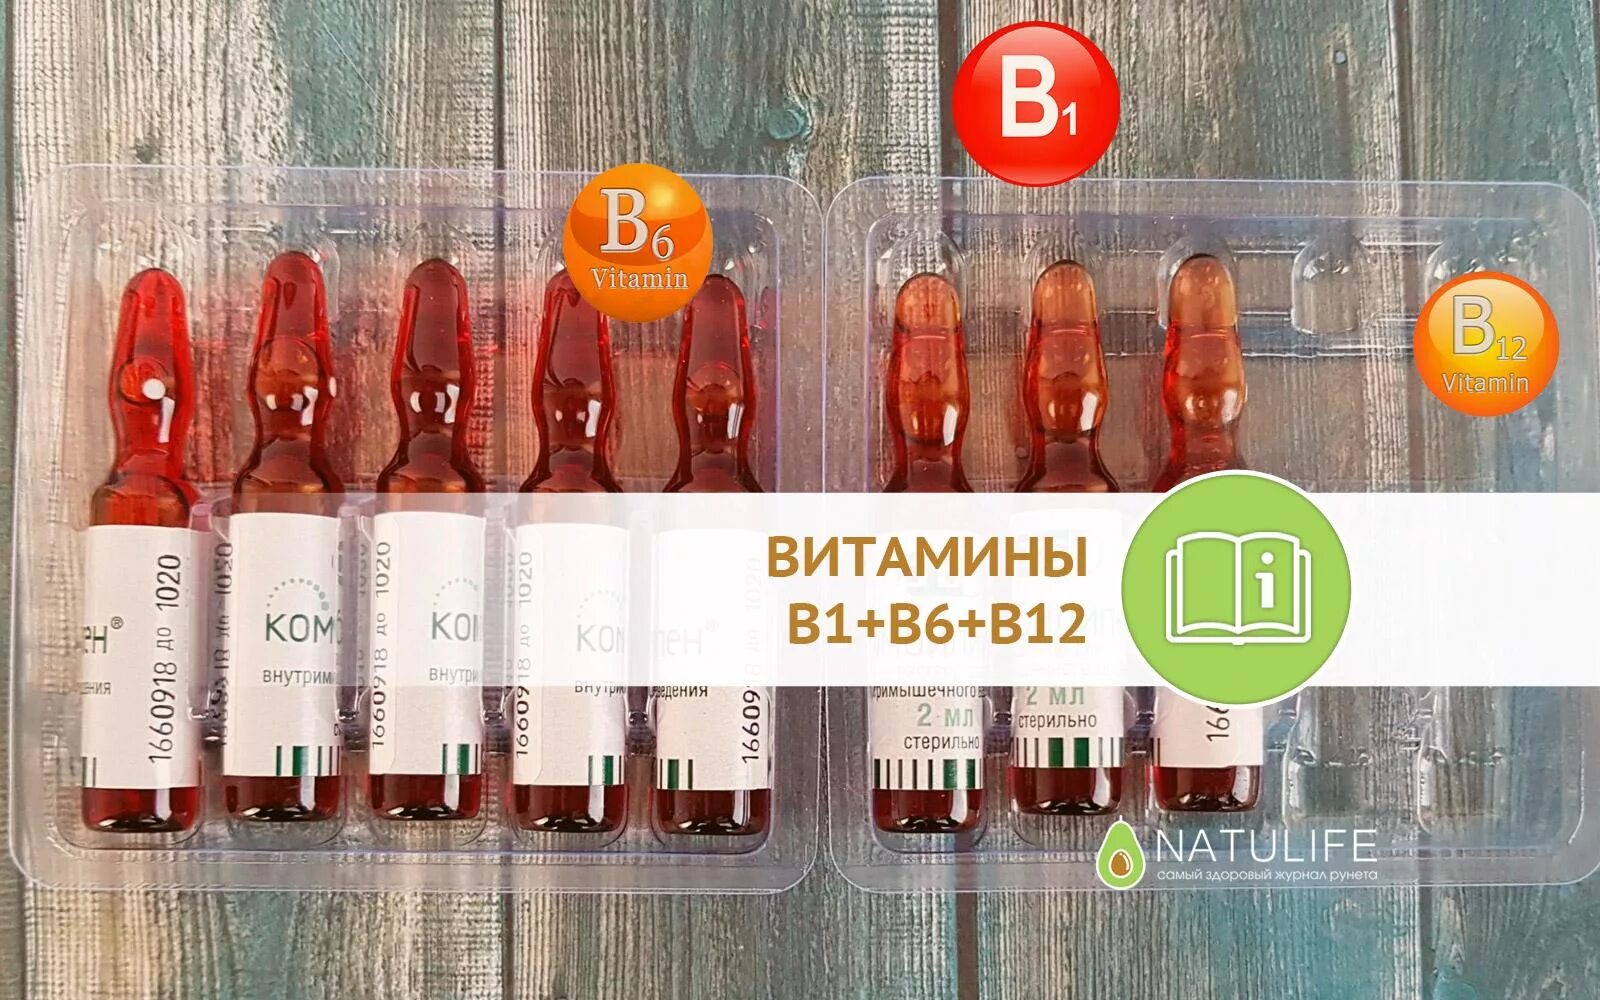 Уколы витамины б 6 б 12. Витамины б1 б6 уколы. Комплекс витаминов б1 б6 б12 в ампулах. B1 b6 b12 витамины в ампулах JN pfgjz. Комплекс б1 б6 б12 уколы витамины.